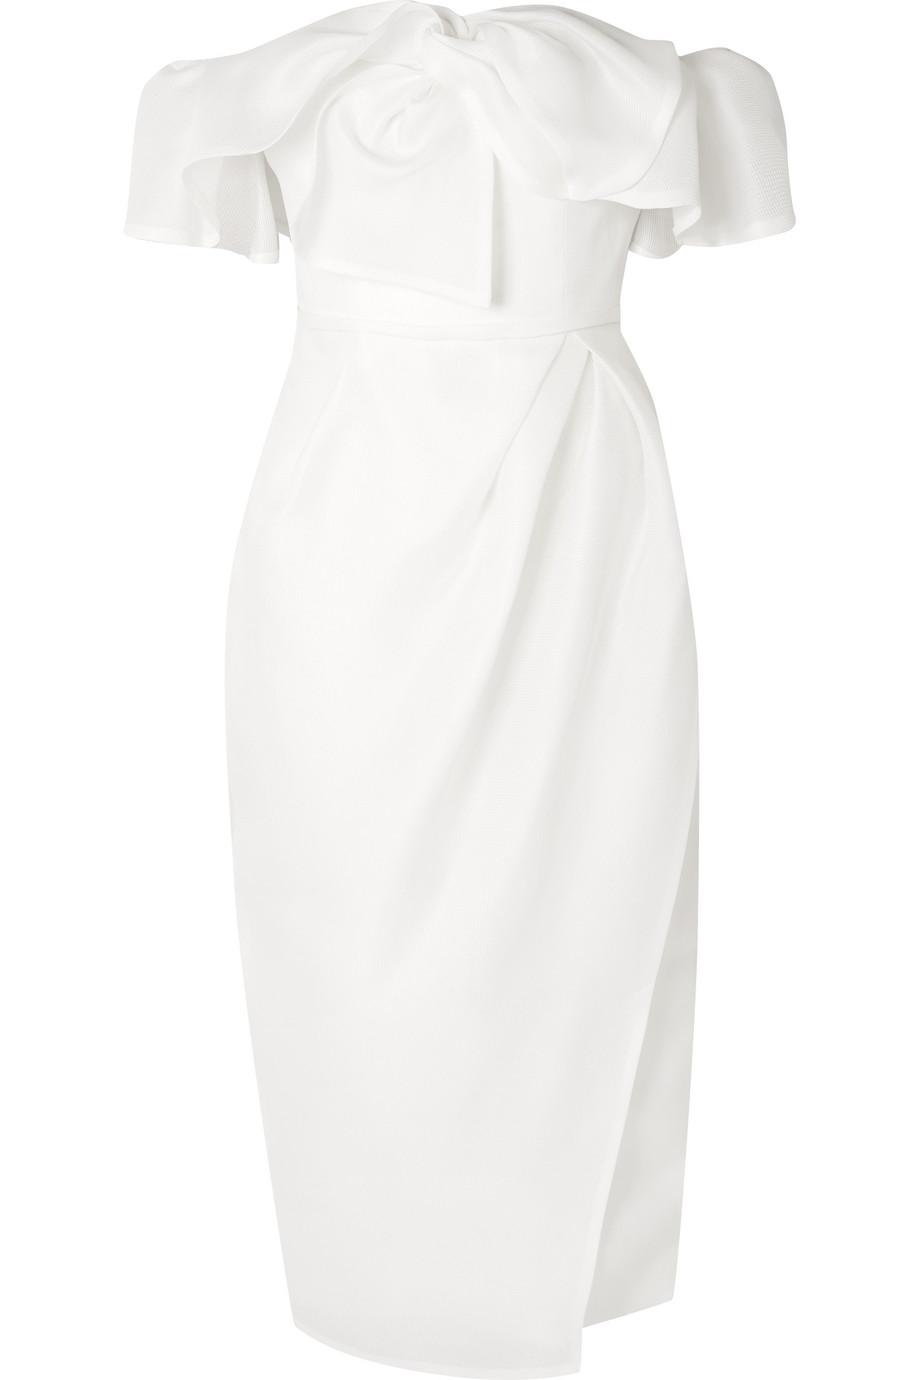 white formal cocktail dress